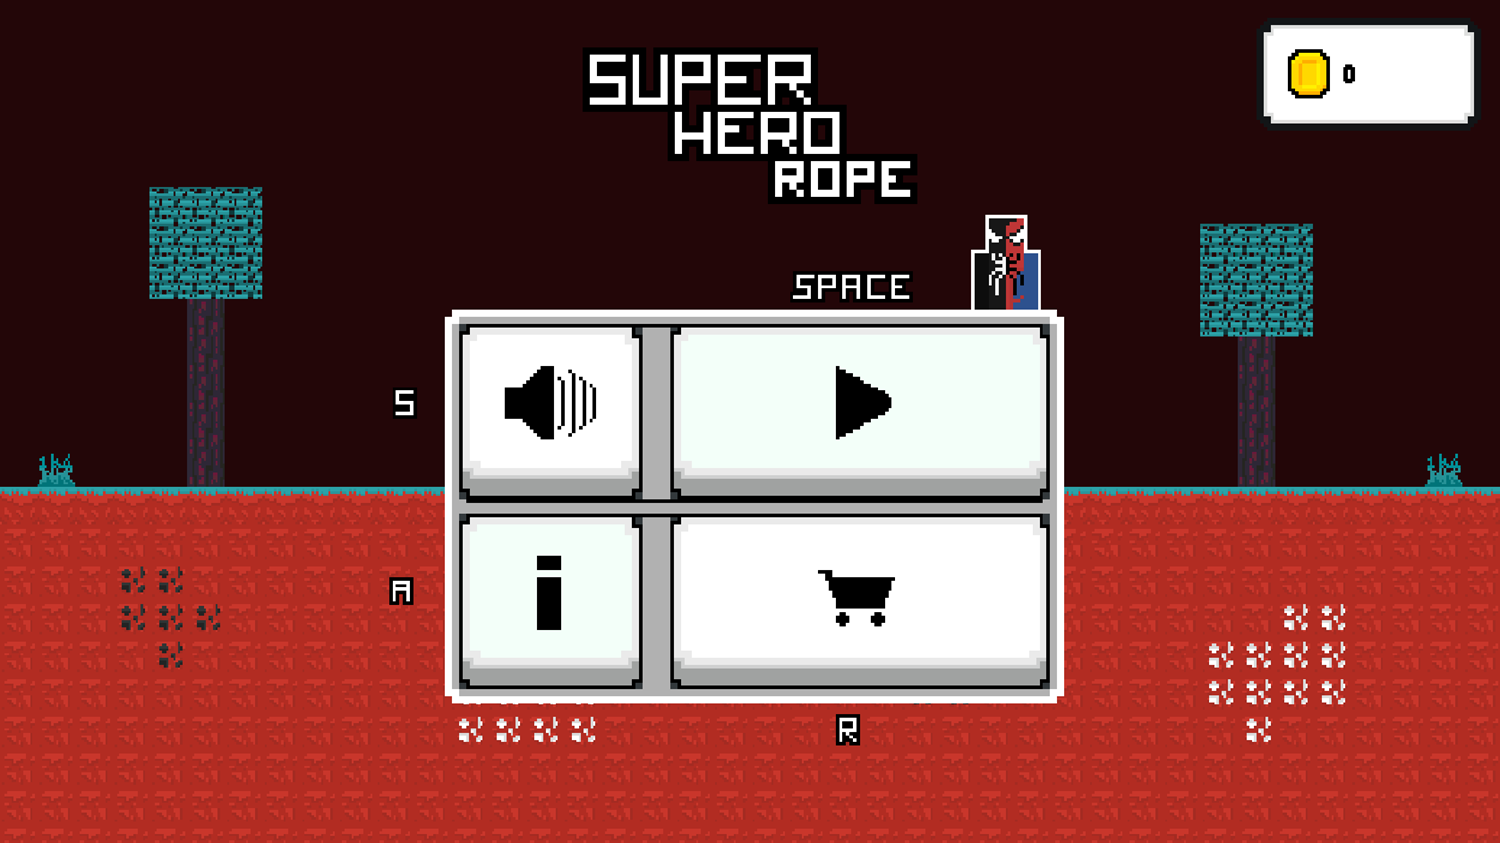 Super Hero Rope Game Welcome Screen Screenshot.